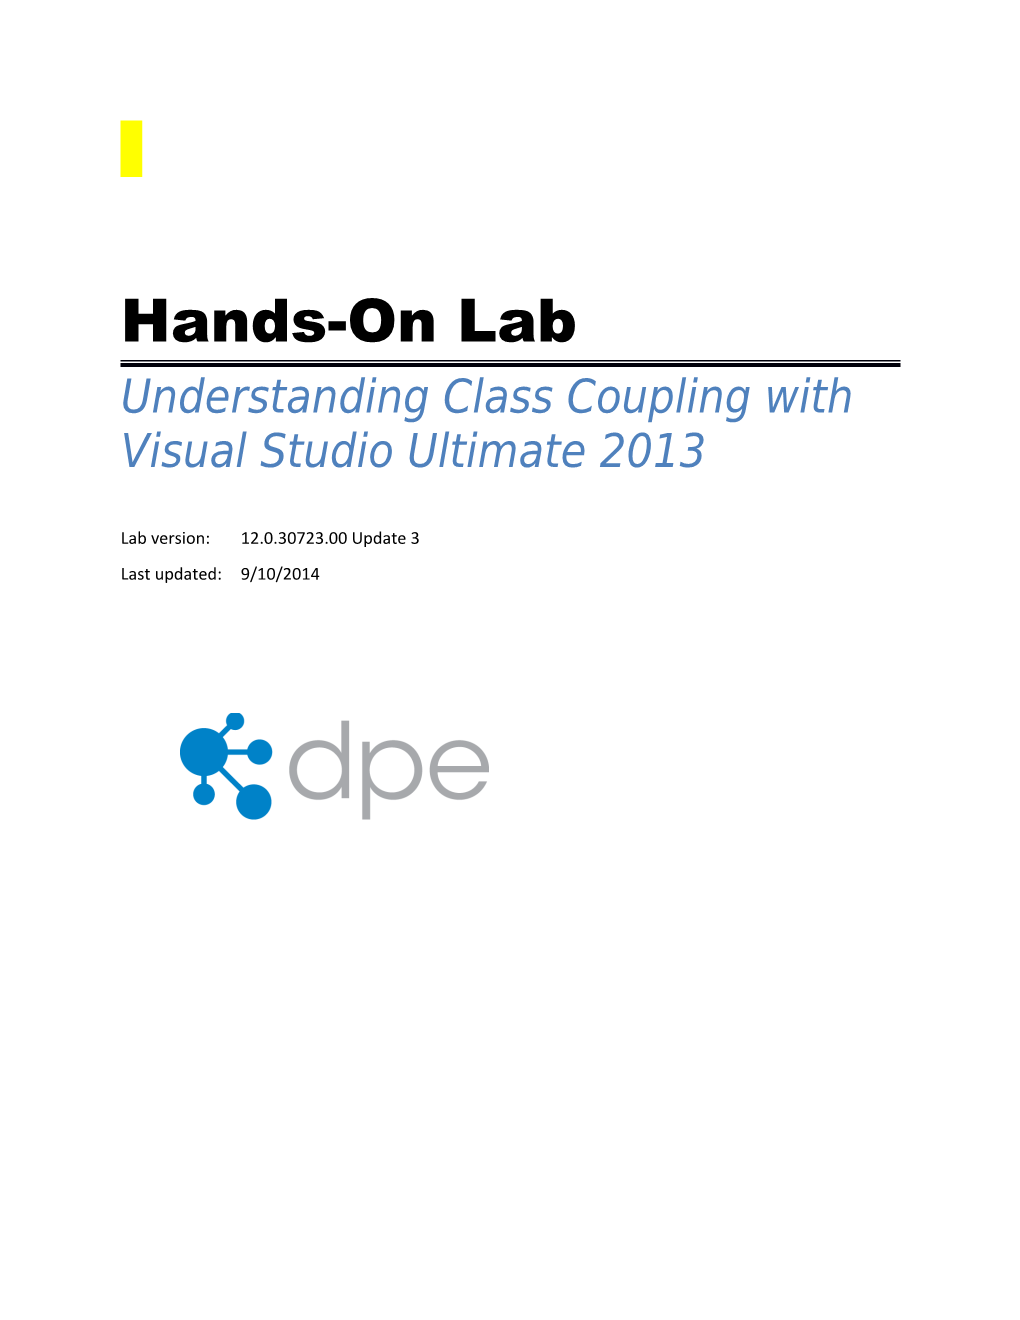 Understanding Class Coupling with Visual Studio Ultimate 2013